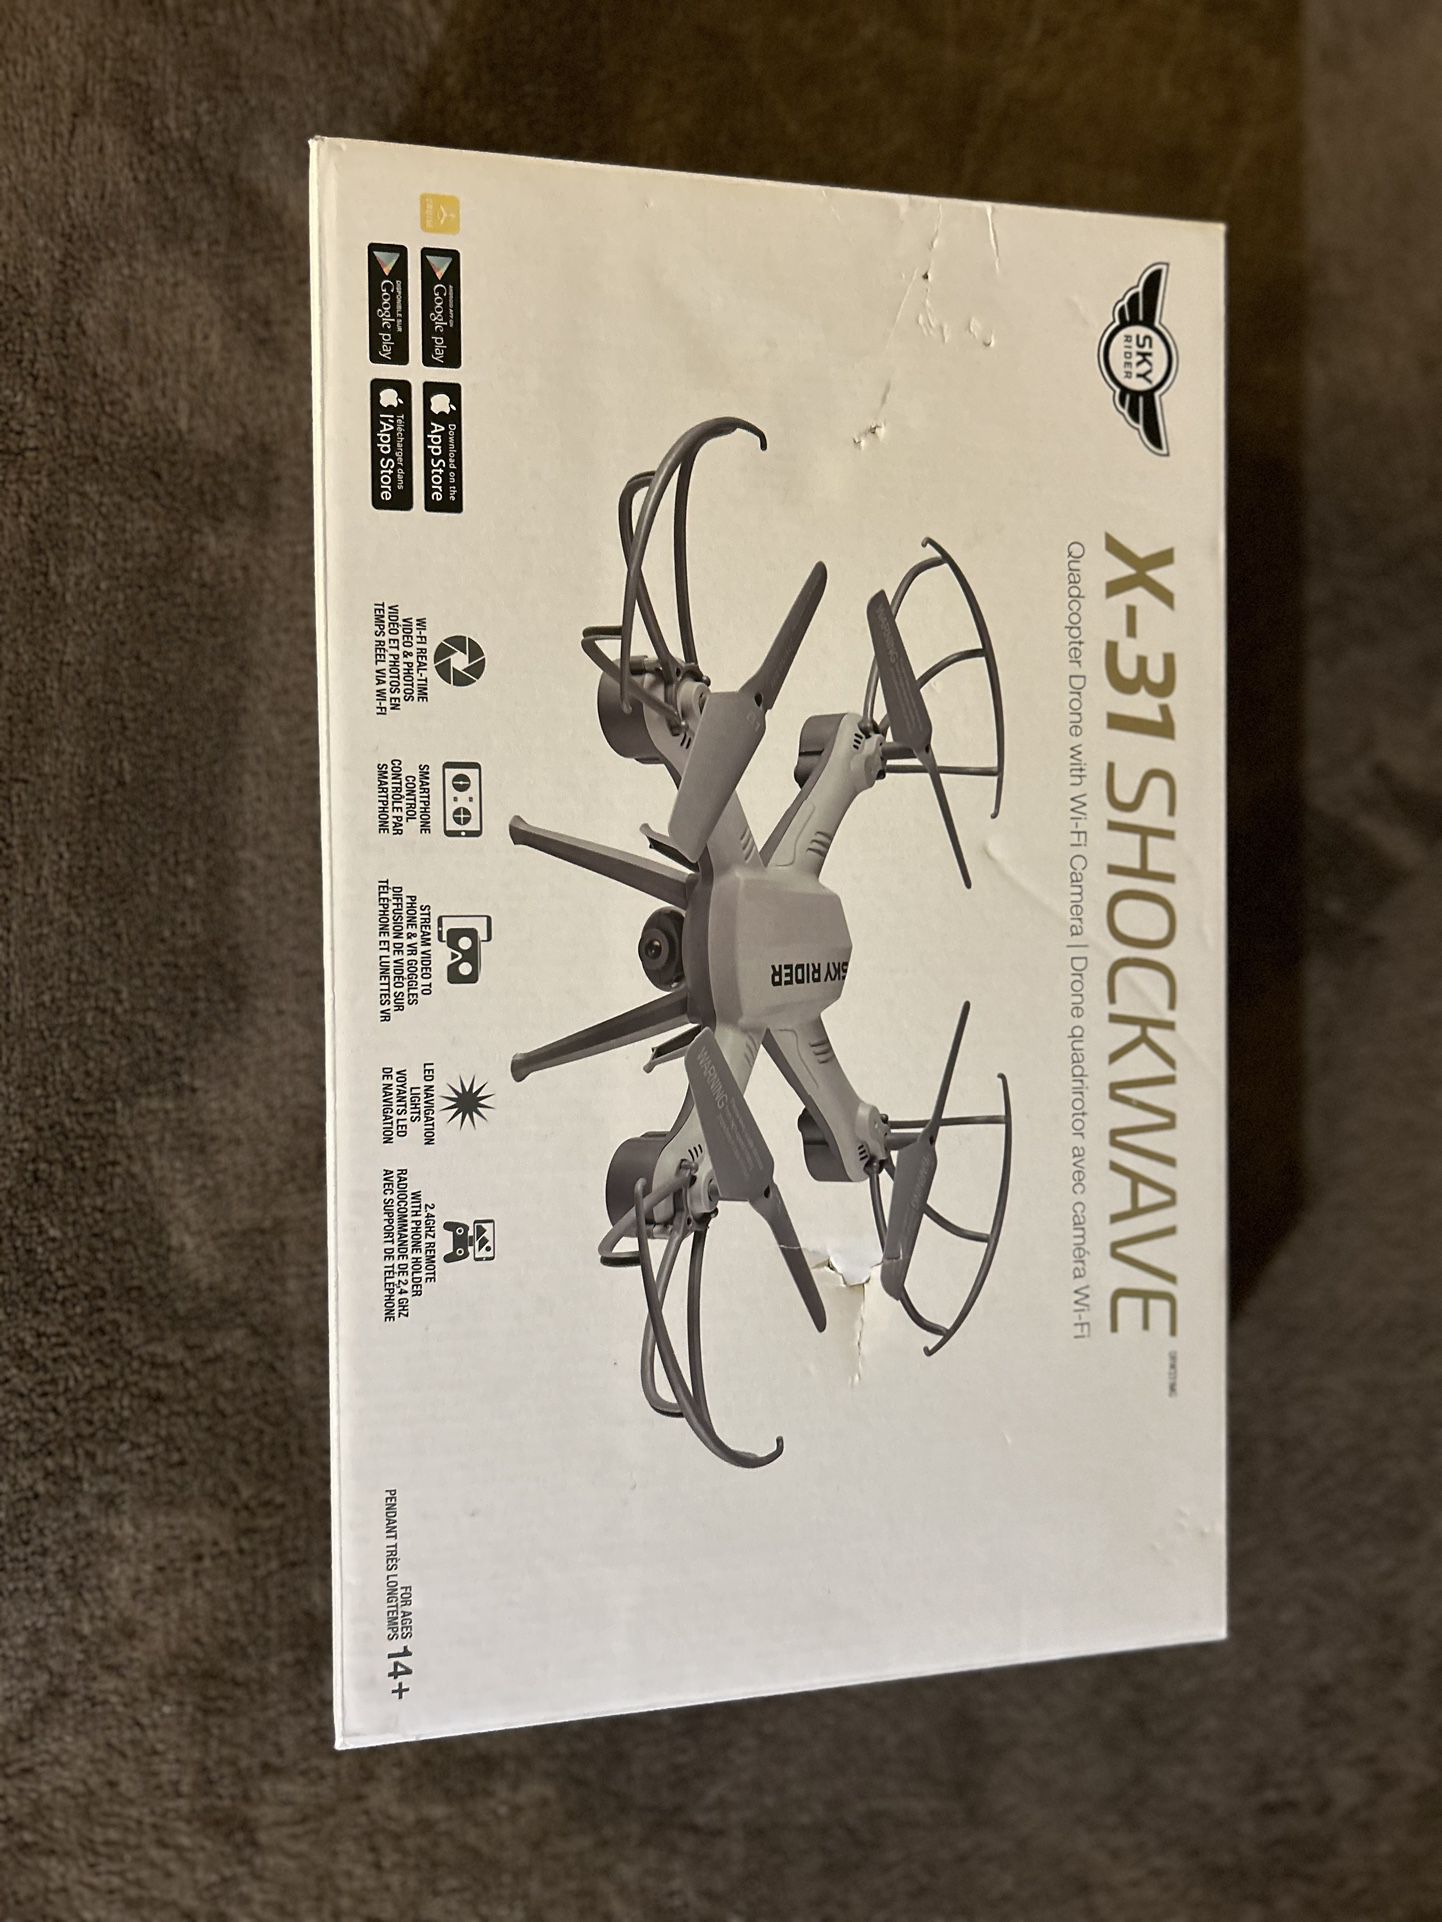 Quadcopter Drone w/ WIFI Camera - Brand New